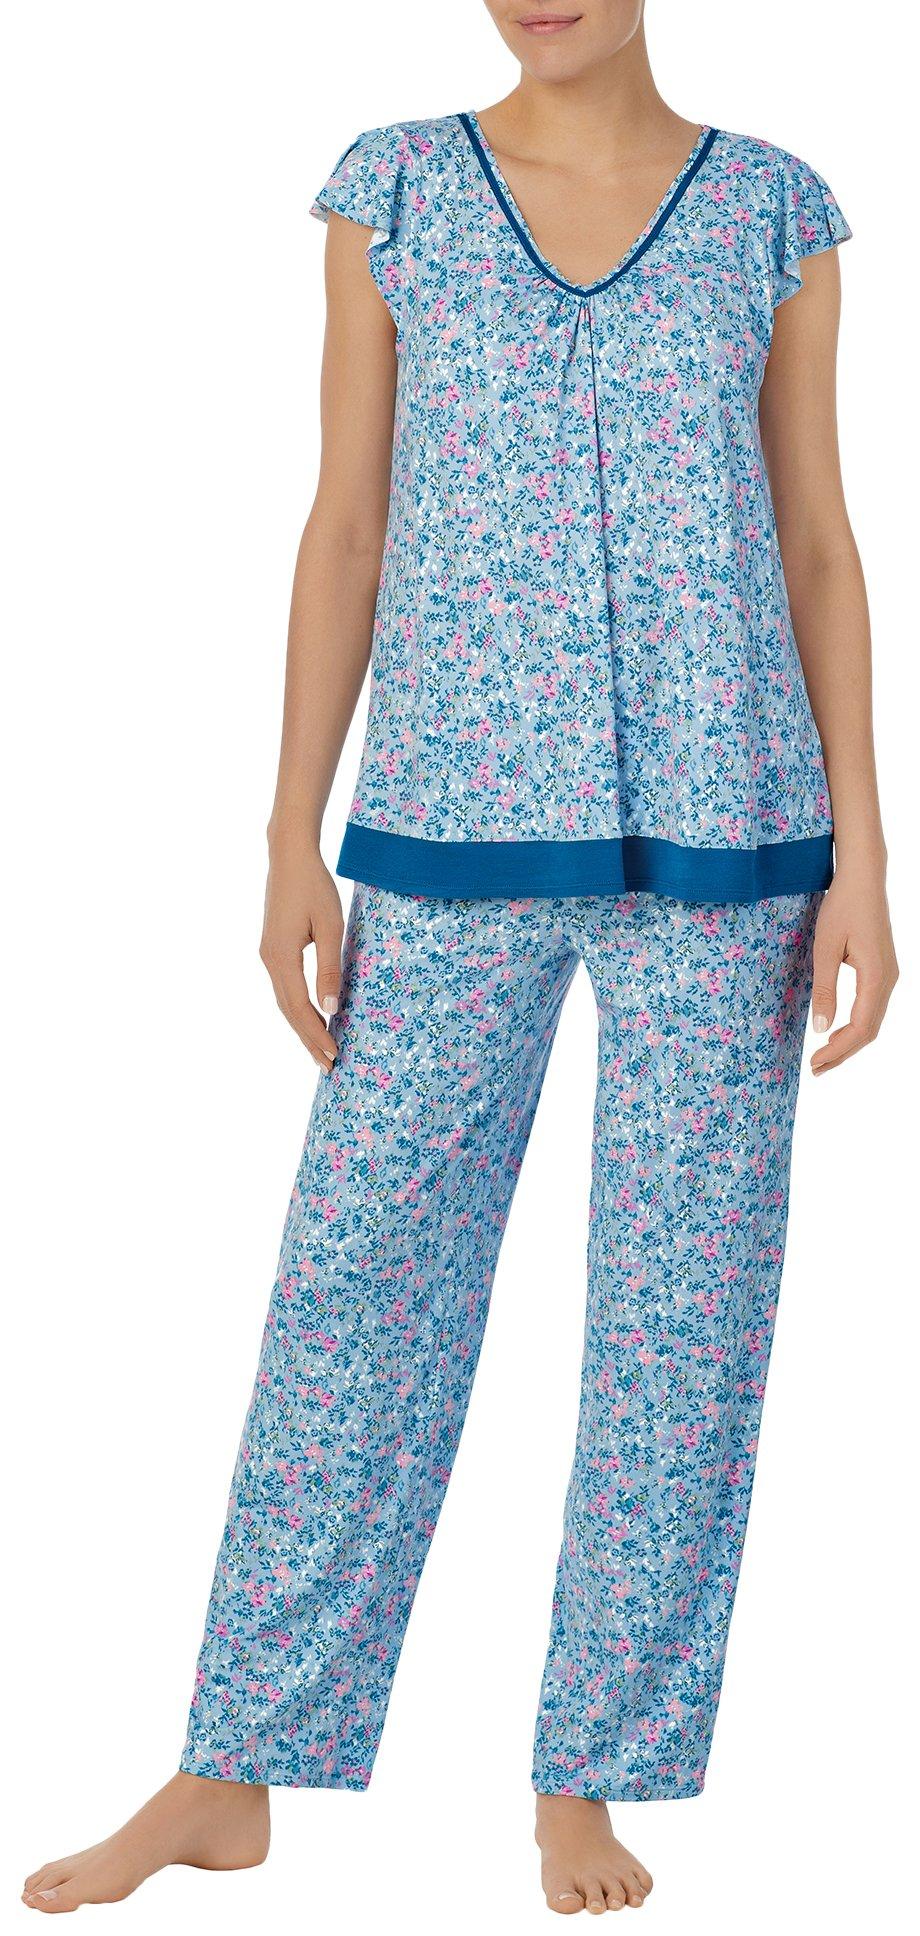 Womens 2-Pc. Floral Top & Pants Sleep Set